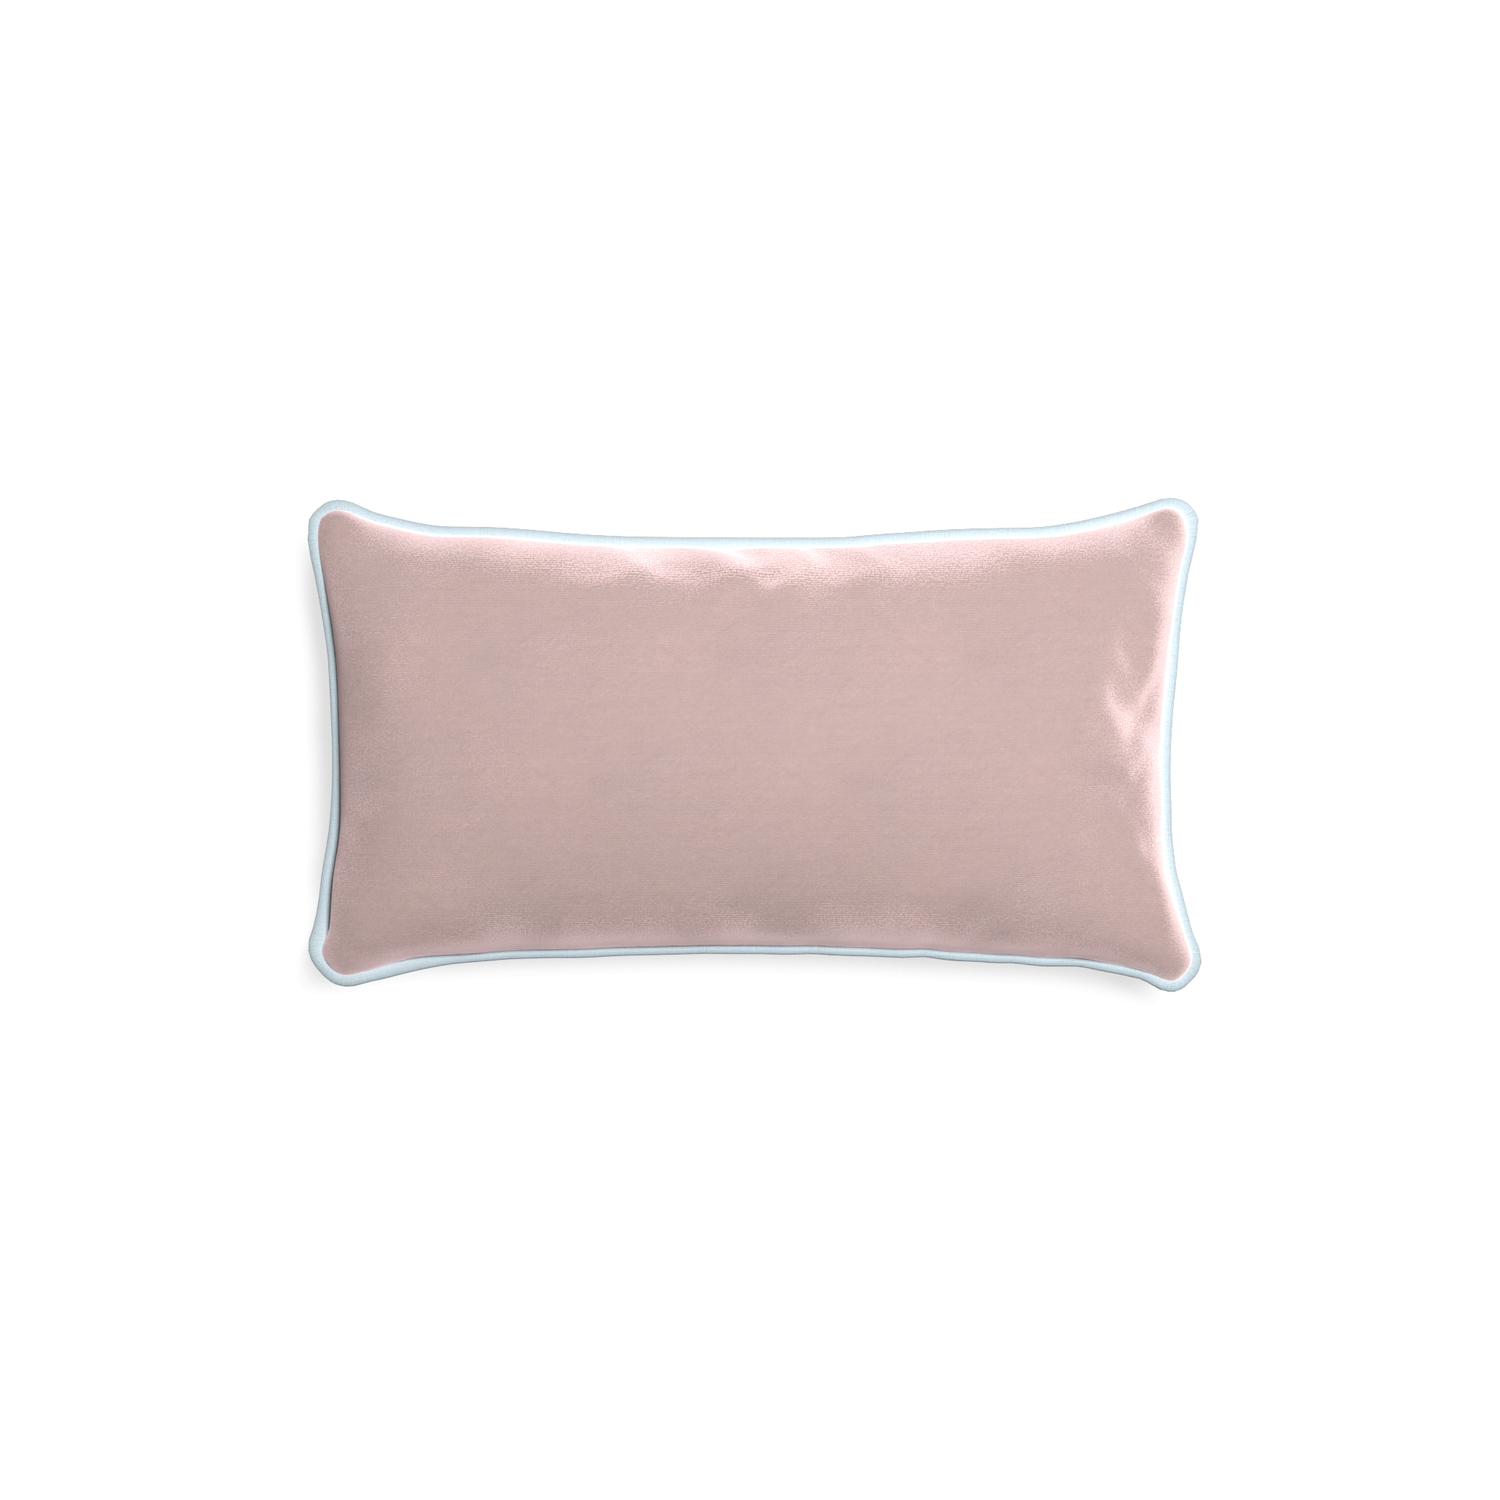 rectangle light pink velvet pillow with light blue piping